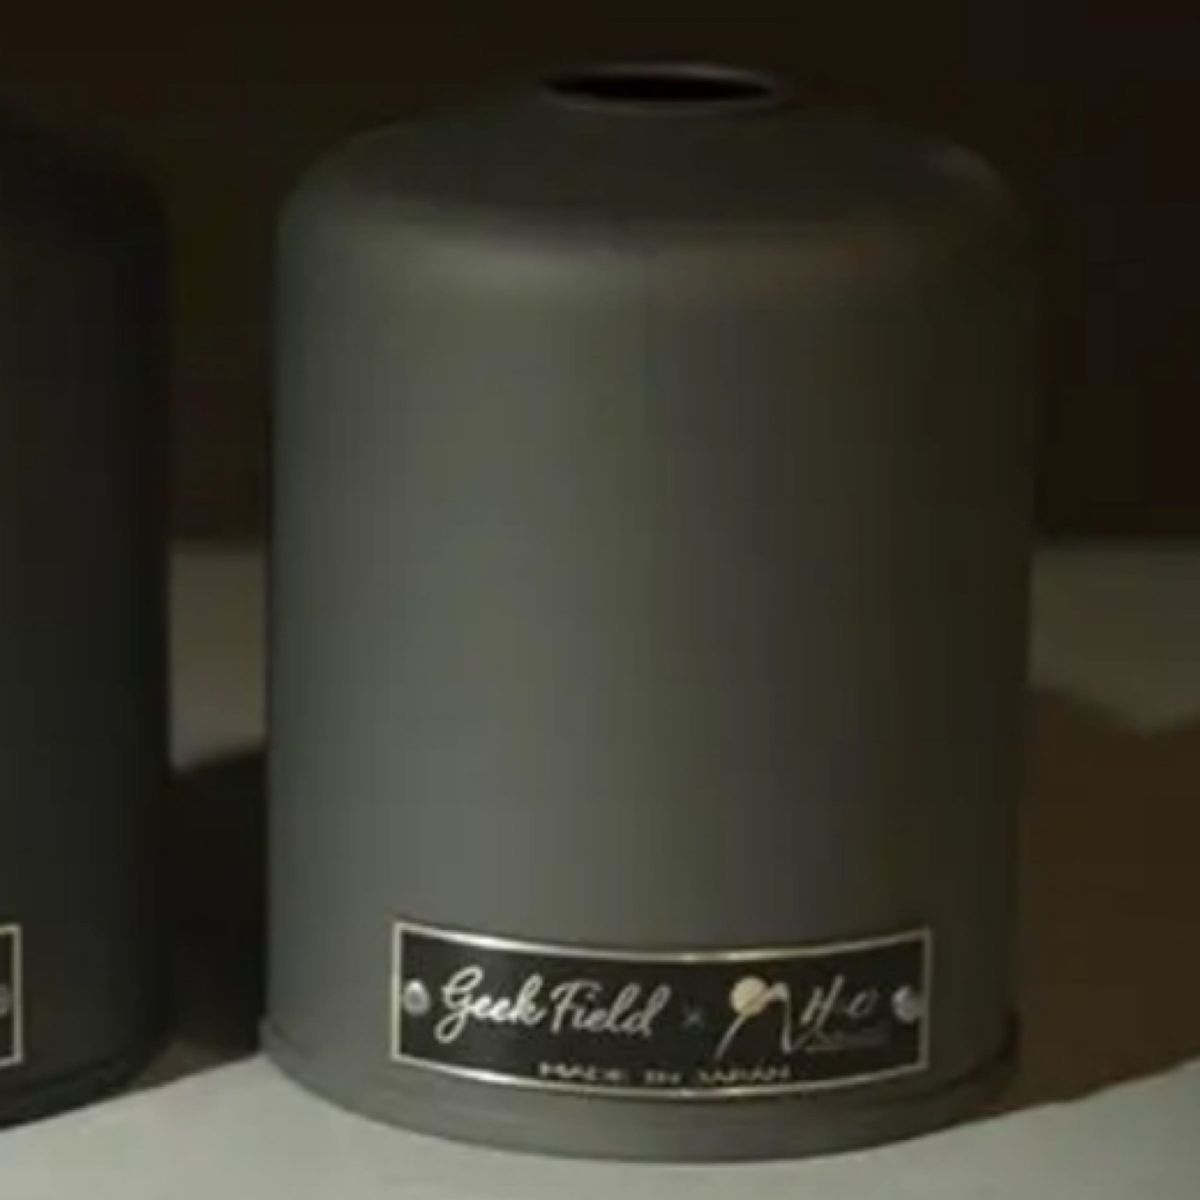 Geek Field & H&O ガス缶 カバー BRUNT ウィングトップ - バーベキュー